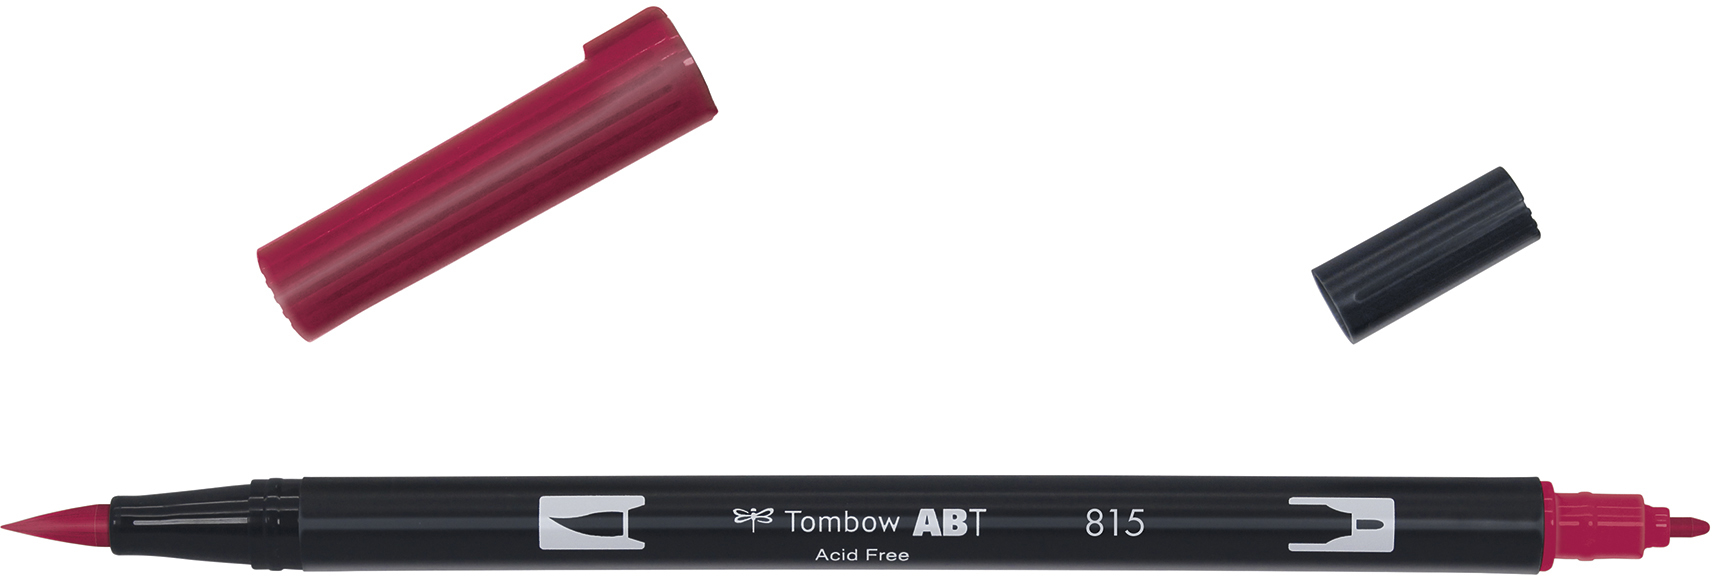 TOMBOW Dual Brush Pen ABT 815 cerise